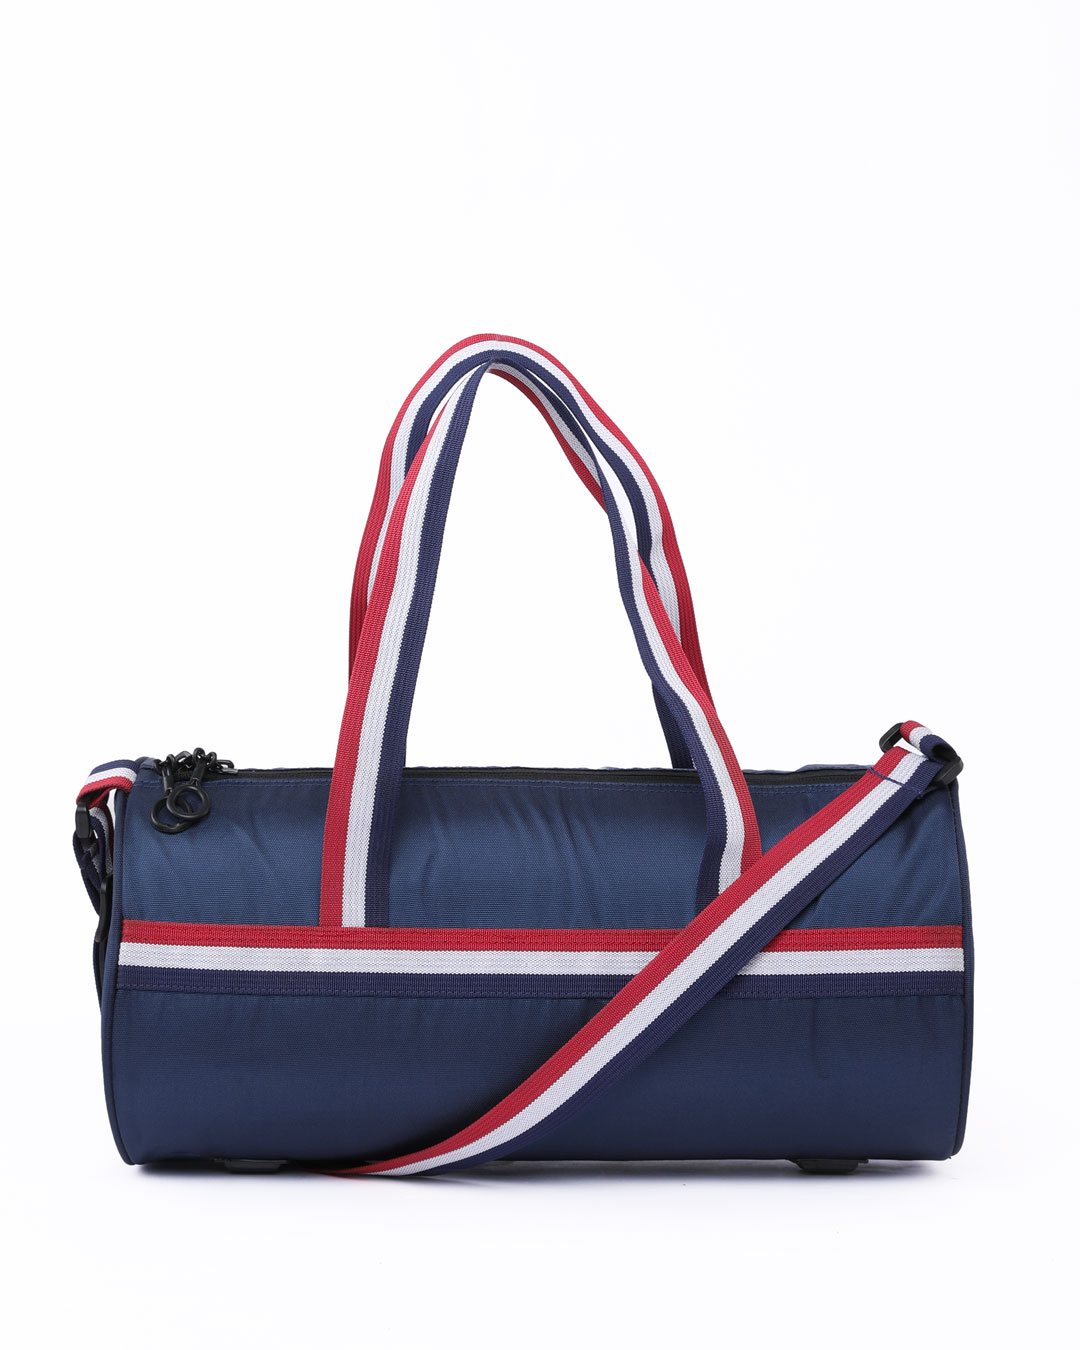 Buy Dribble Duffle Bag Duffle Bags Online India - www.waldenwongart.com